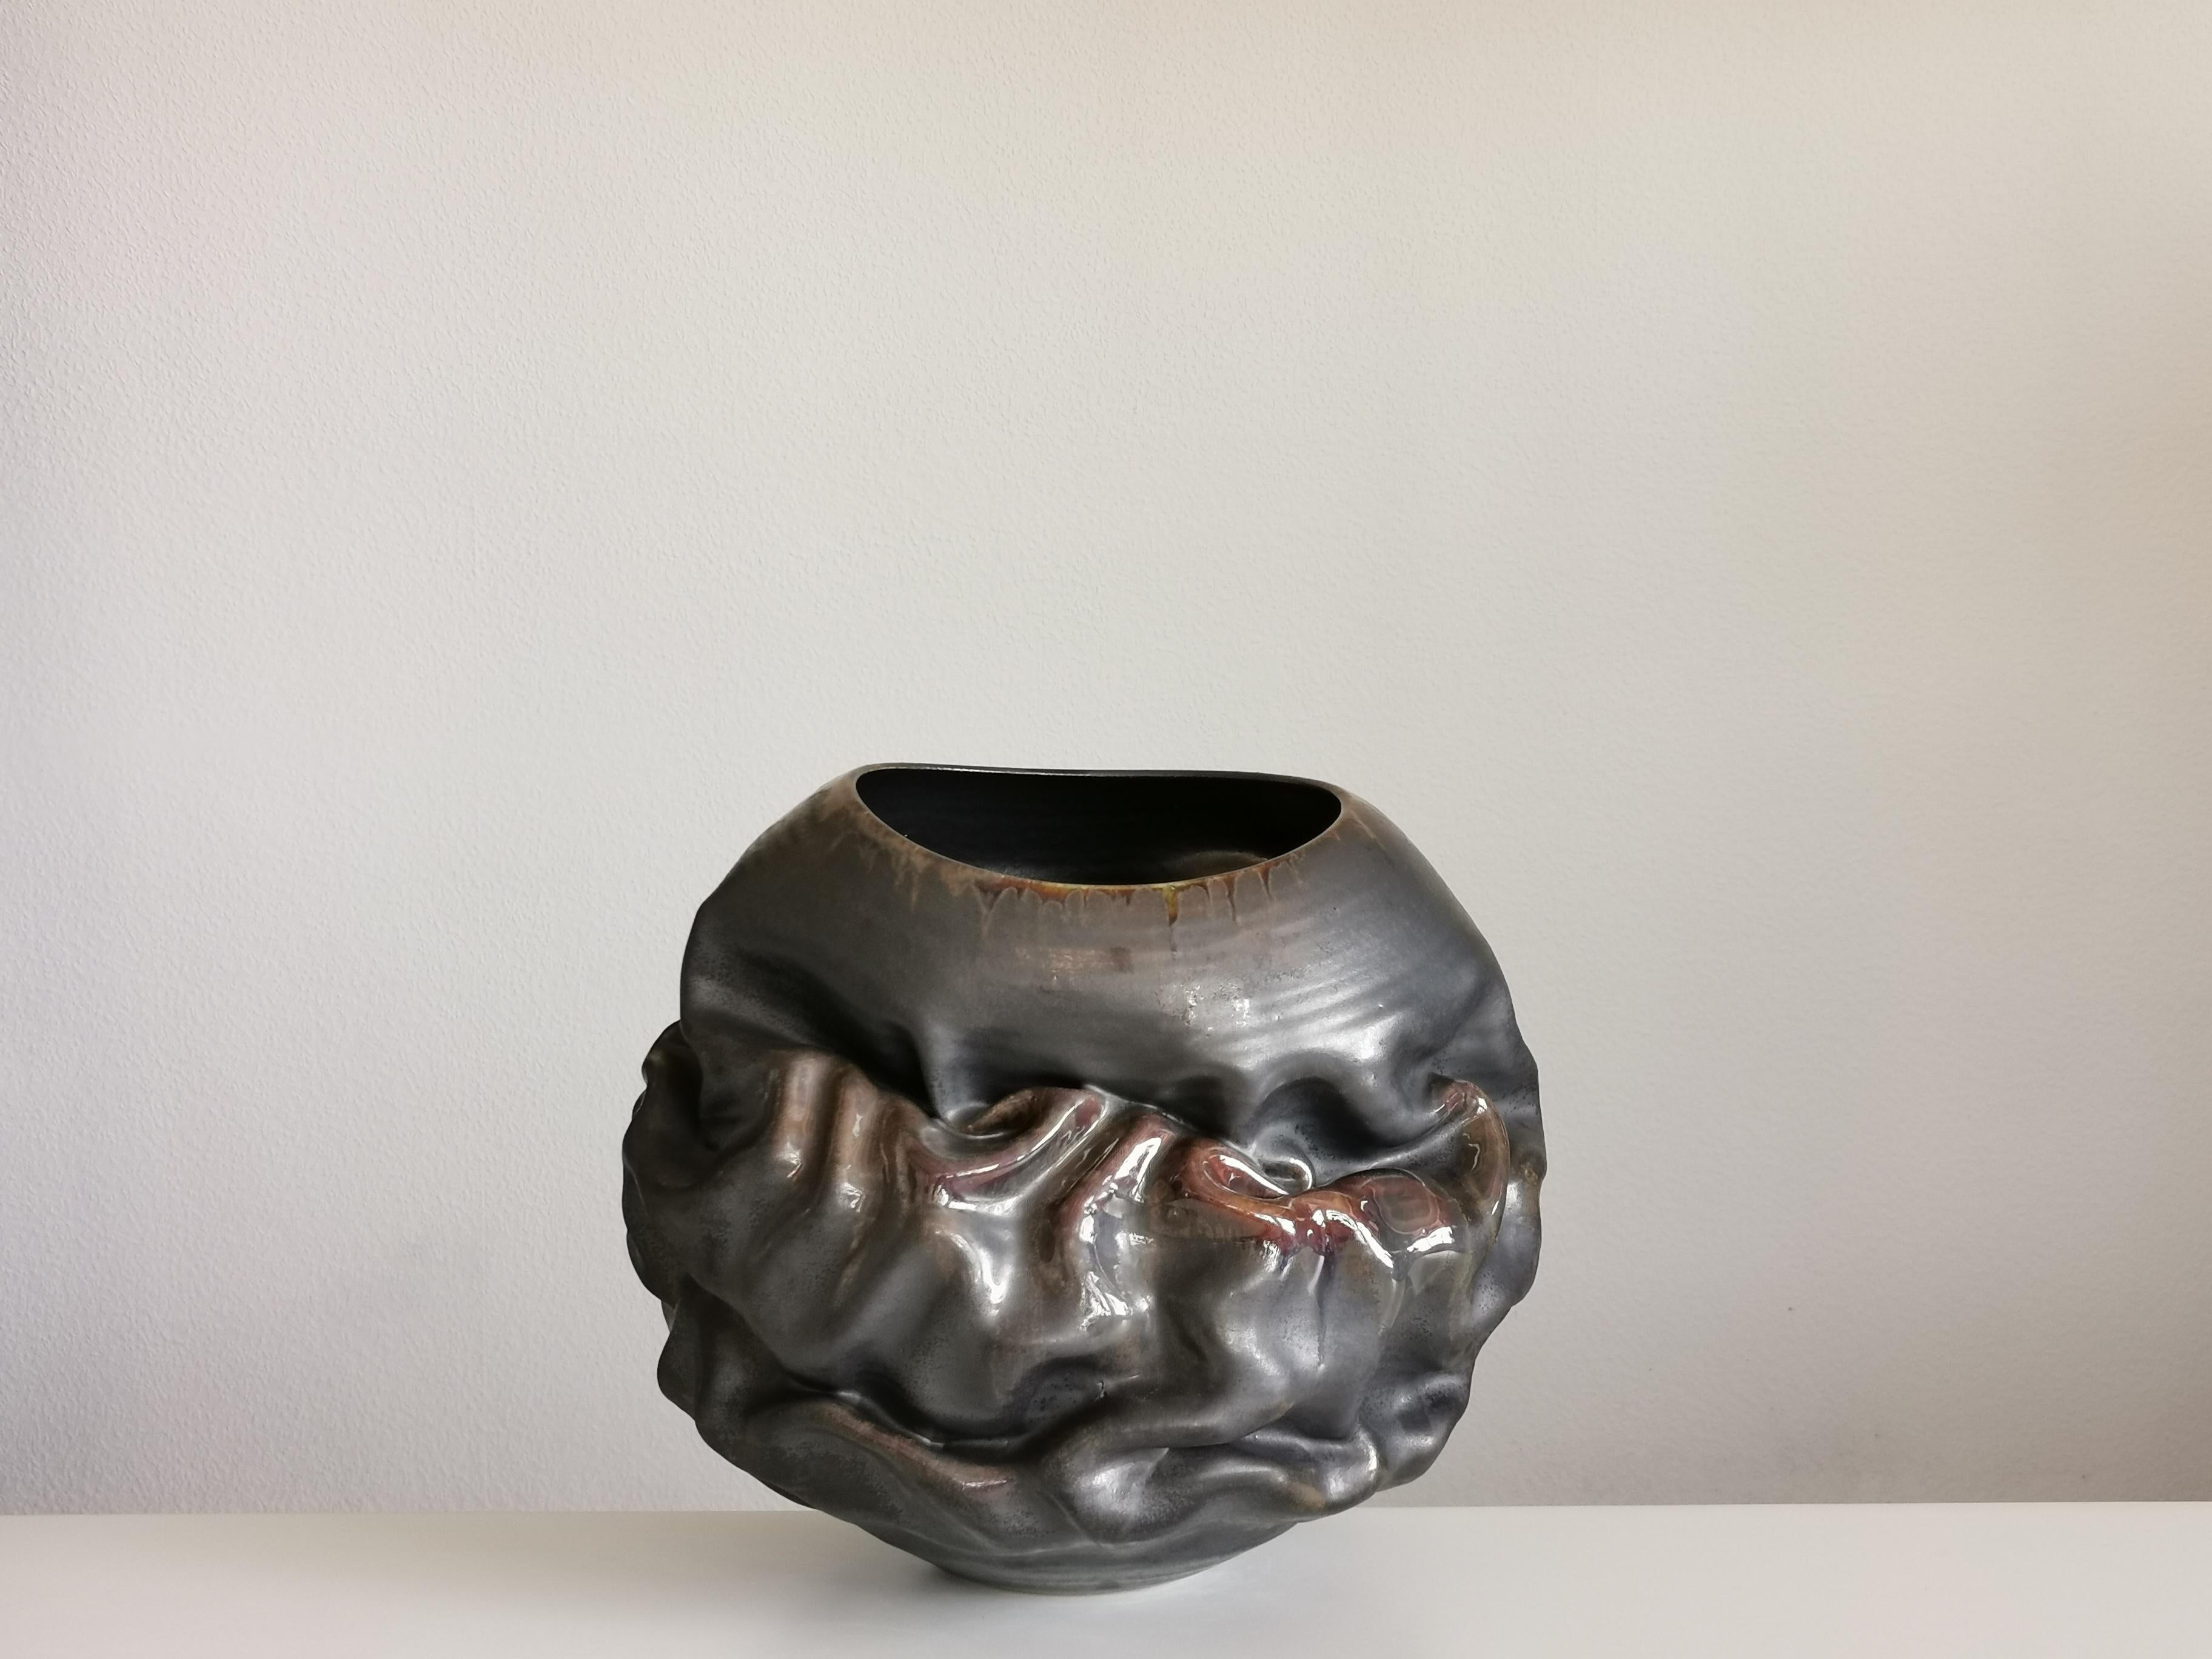 Black Metallic Oval Dehydrated Form, Vase, Interior Sculpture or Vessel, Objet D For Sale 6